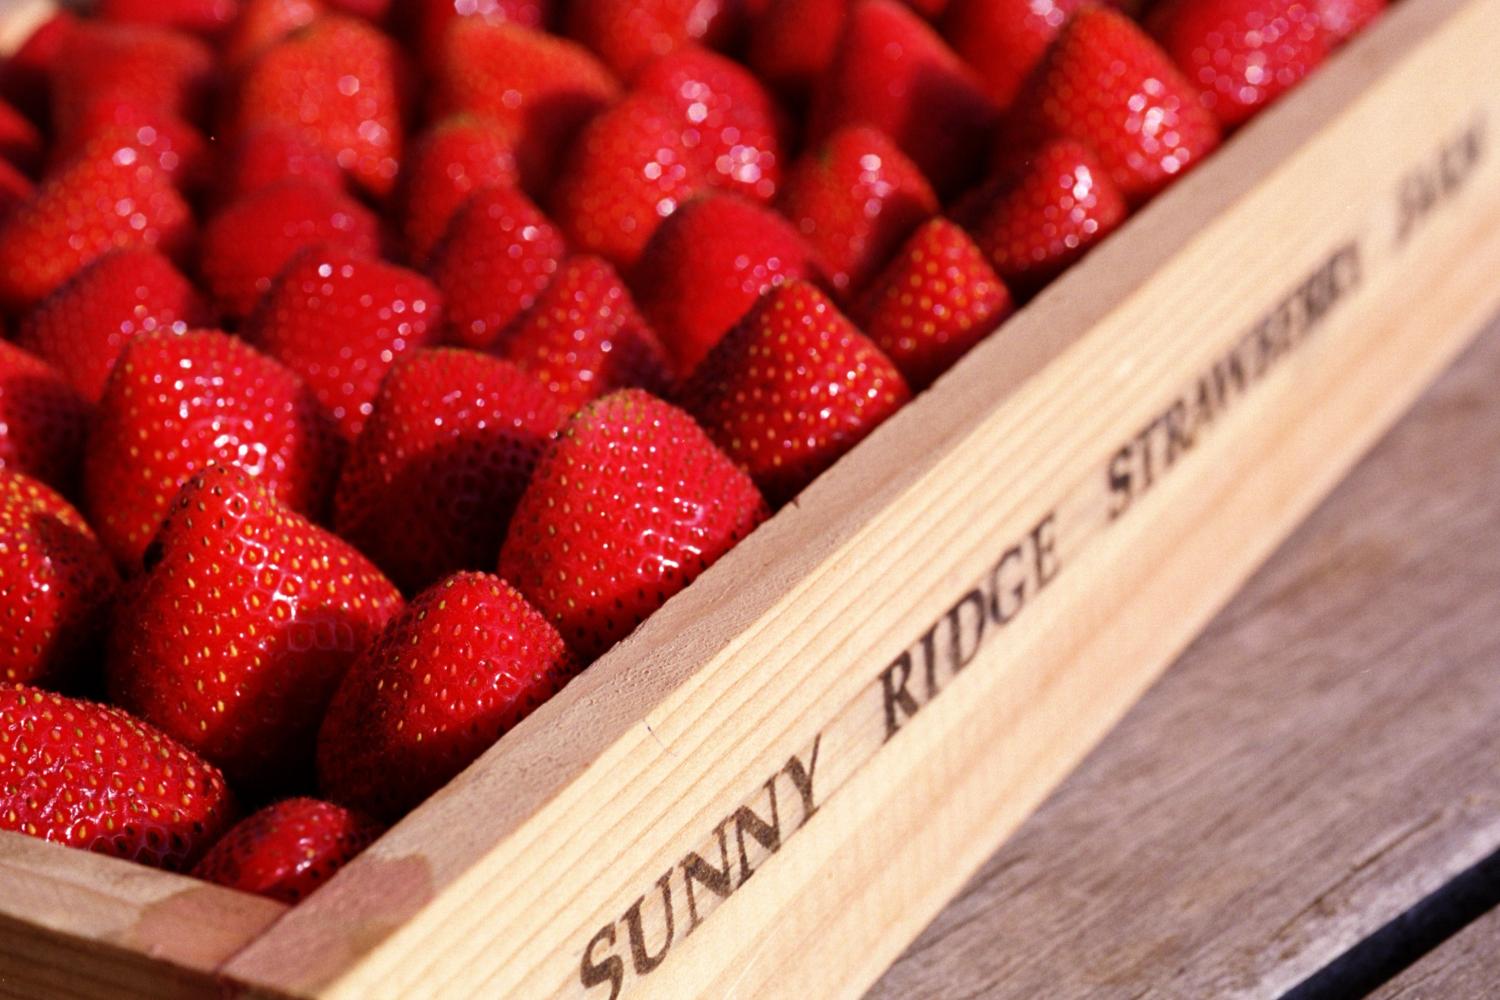 Sunny Ridge Strawberry Farm